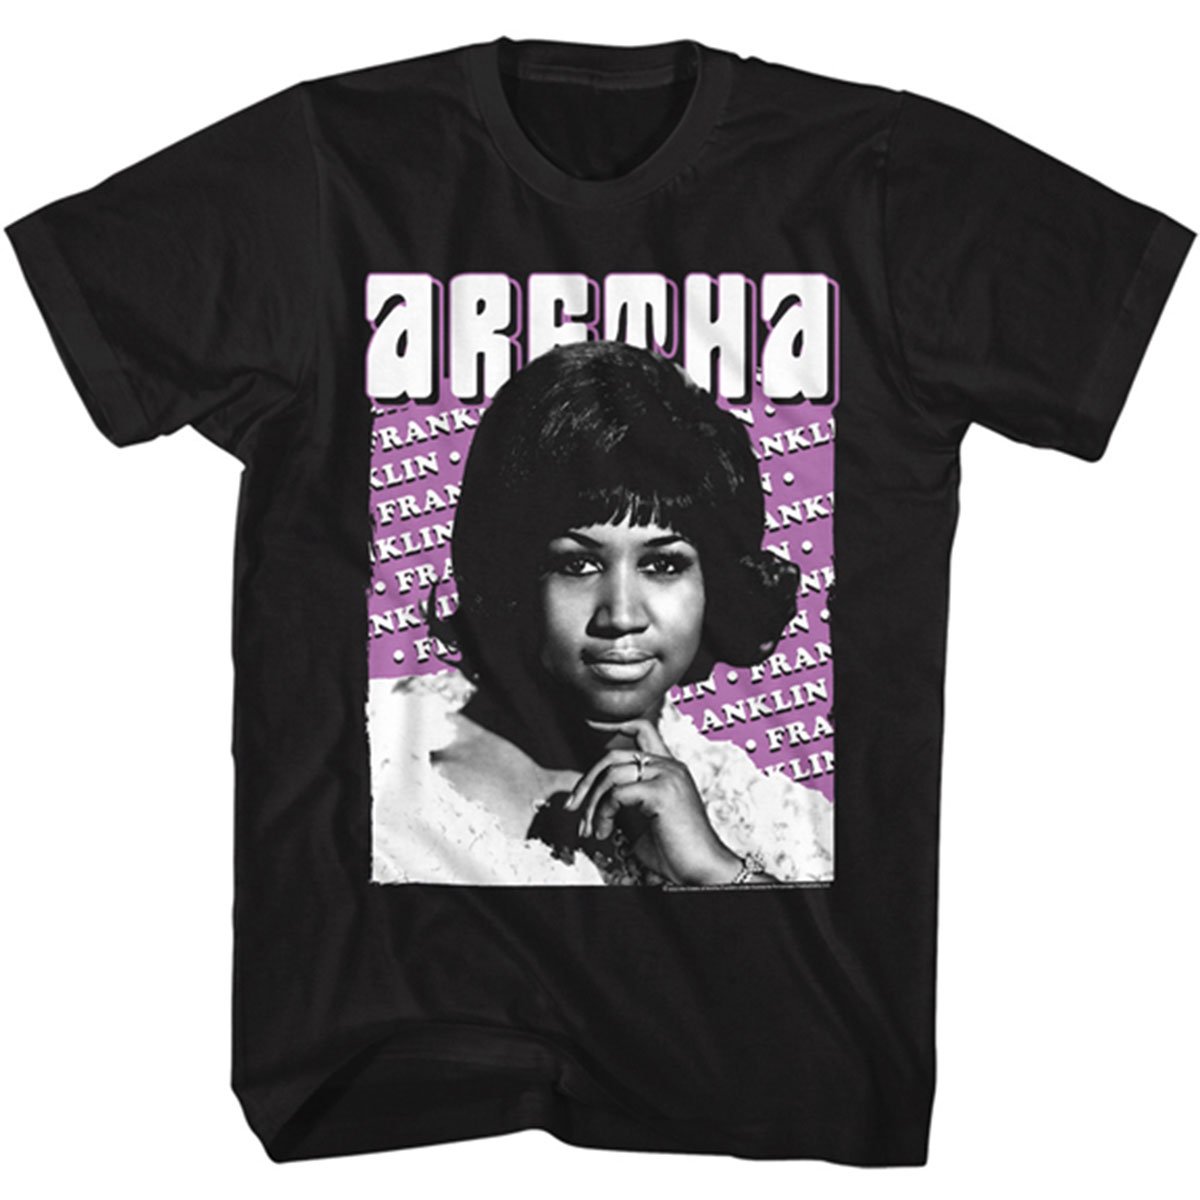 SOUL FUNK Tシャツ - ARETHA FRANKLIN (アレサ フランクリン)Tシャツ-Fedup.jp 店舗販売 通販